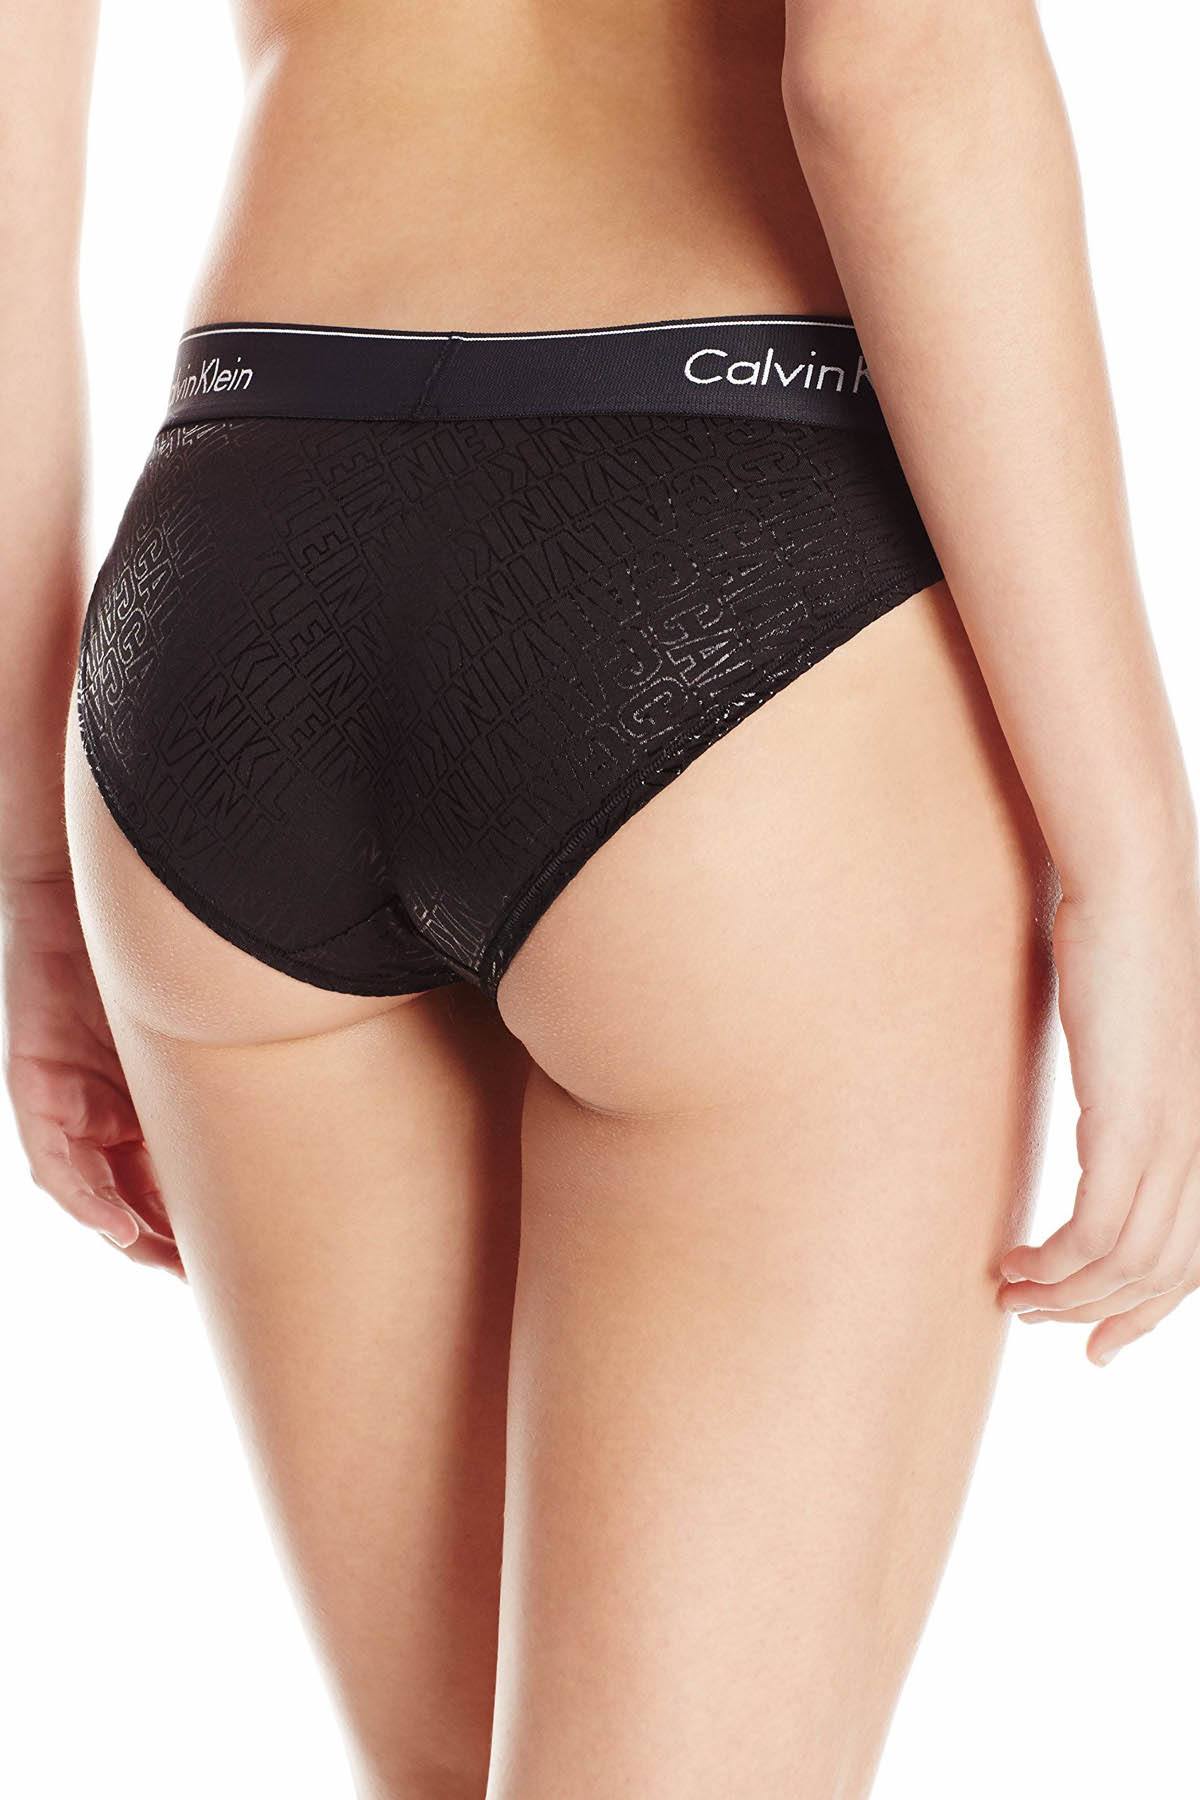 Calvin Klein Black/Metallic Modern Cotton Bikini Brief